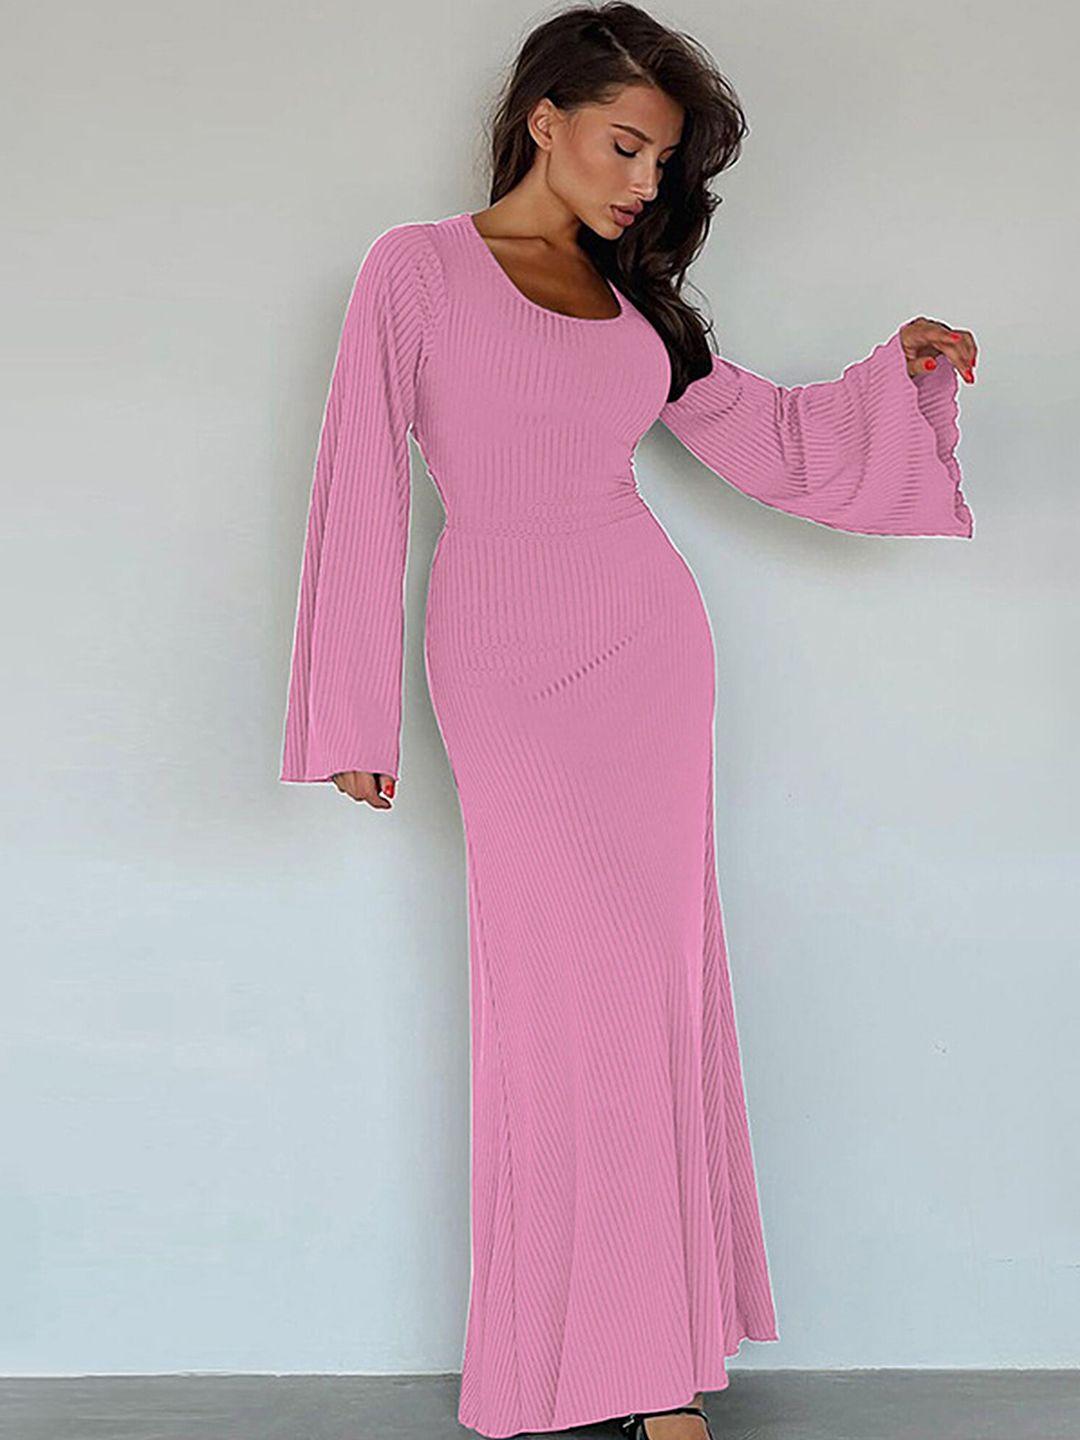 lulu & sky pink dress